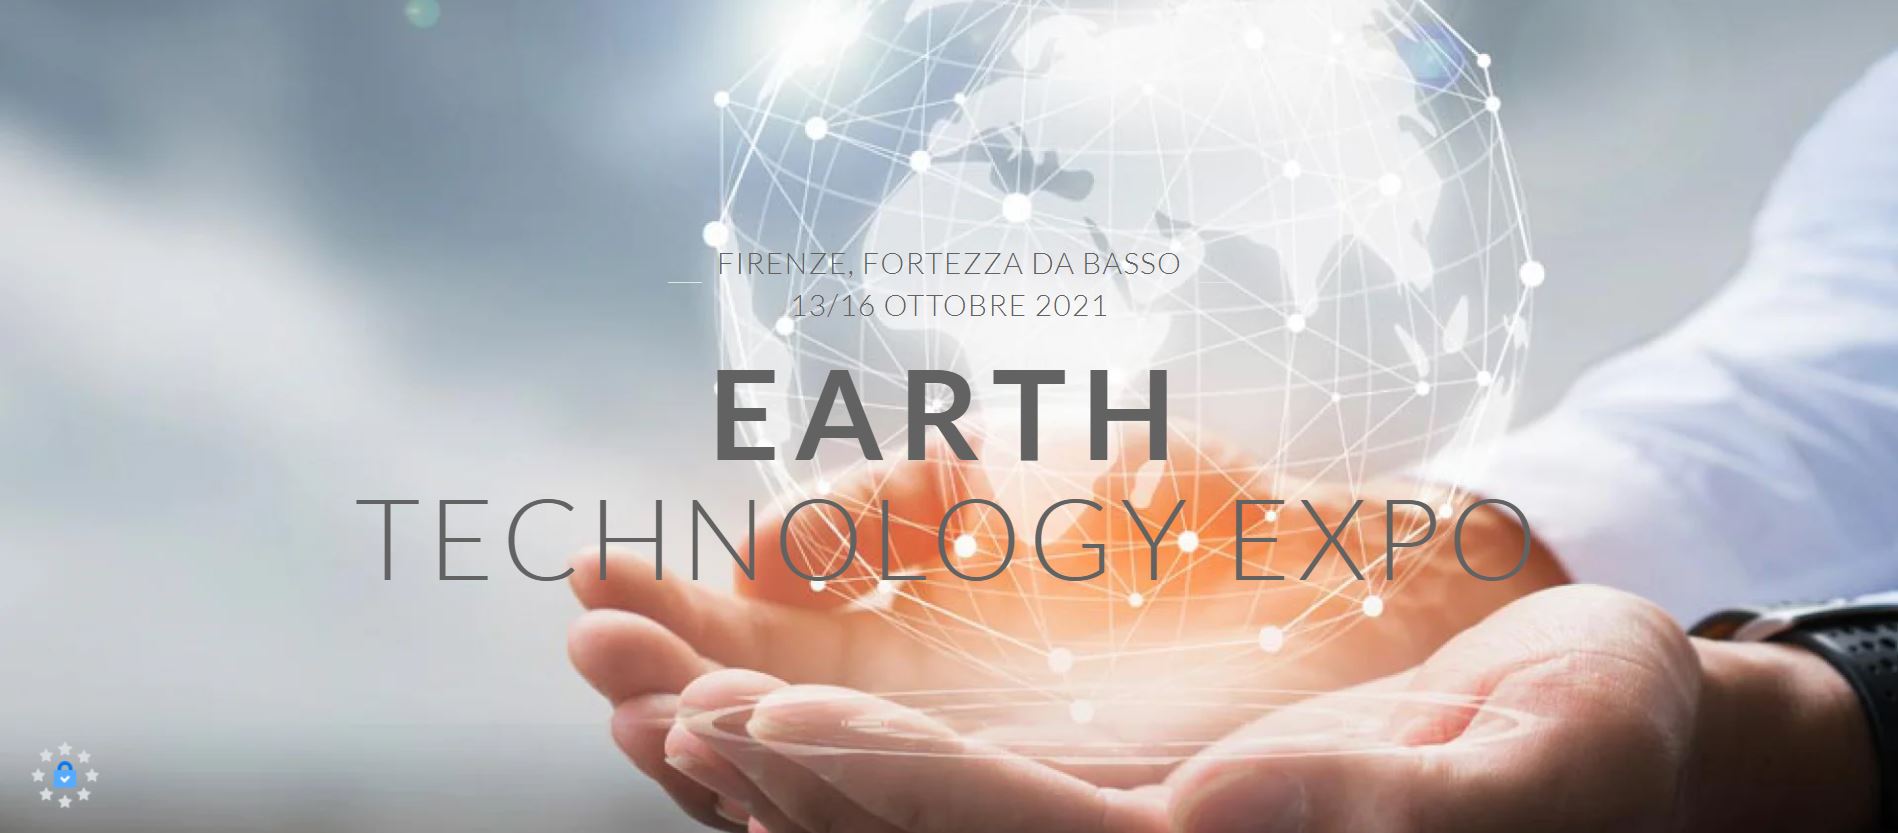 Earth Technology Expo 2021